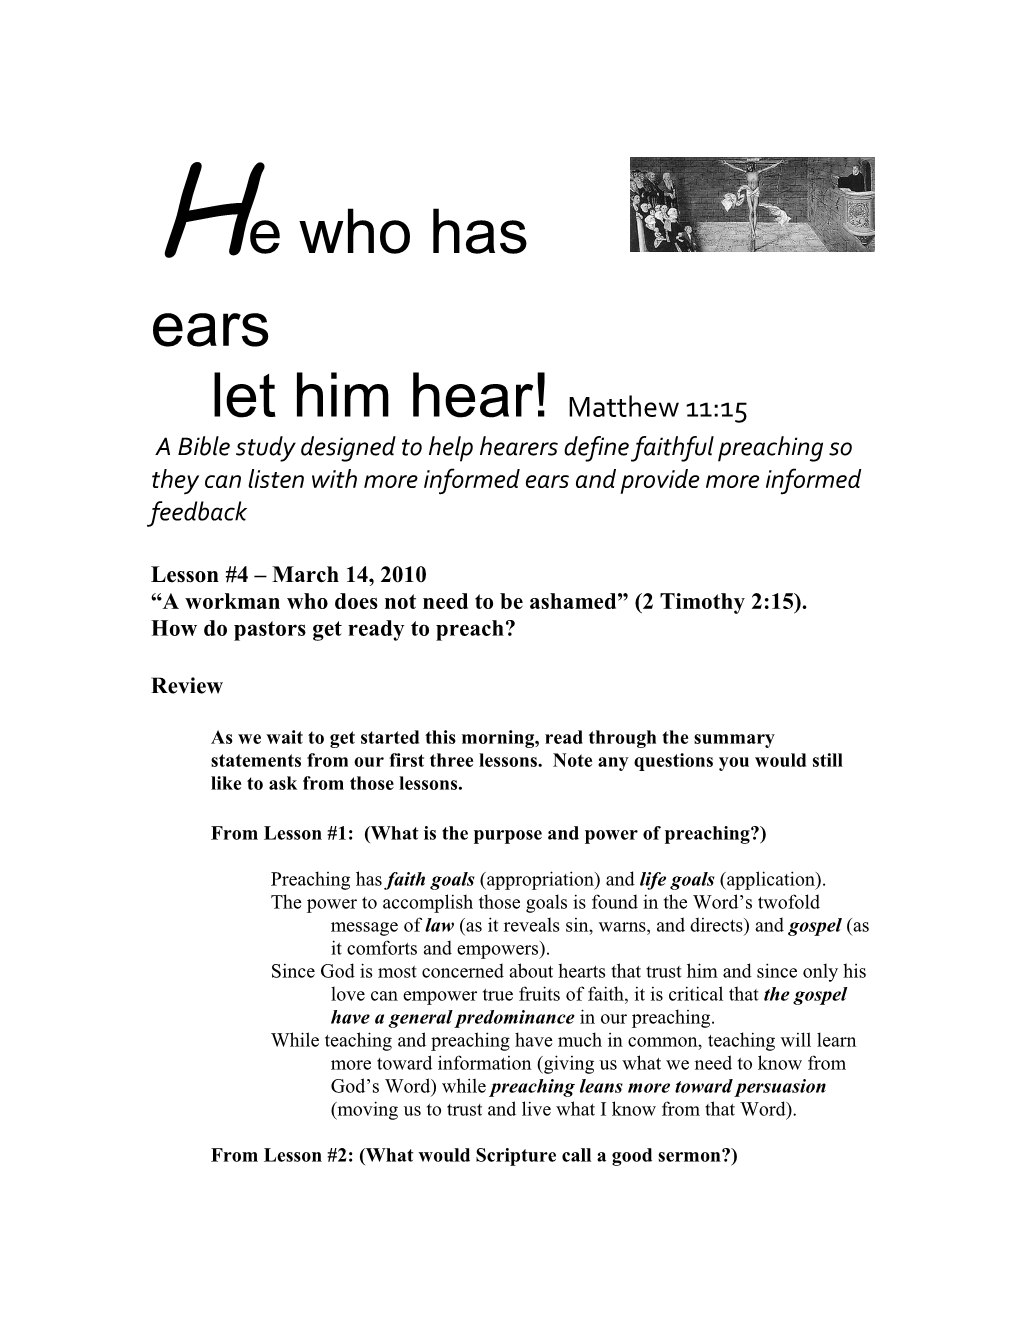 He Who Has Ears